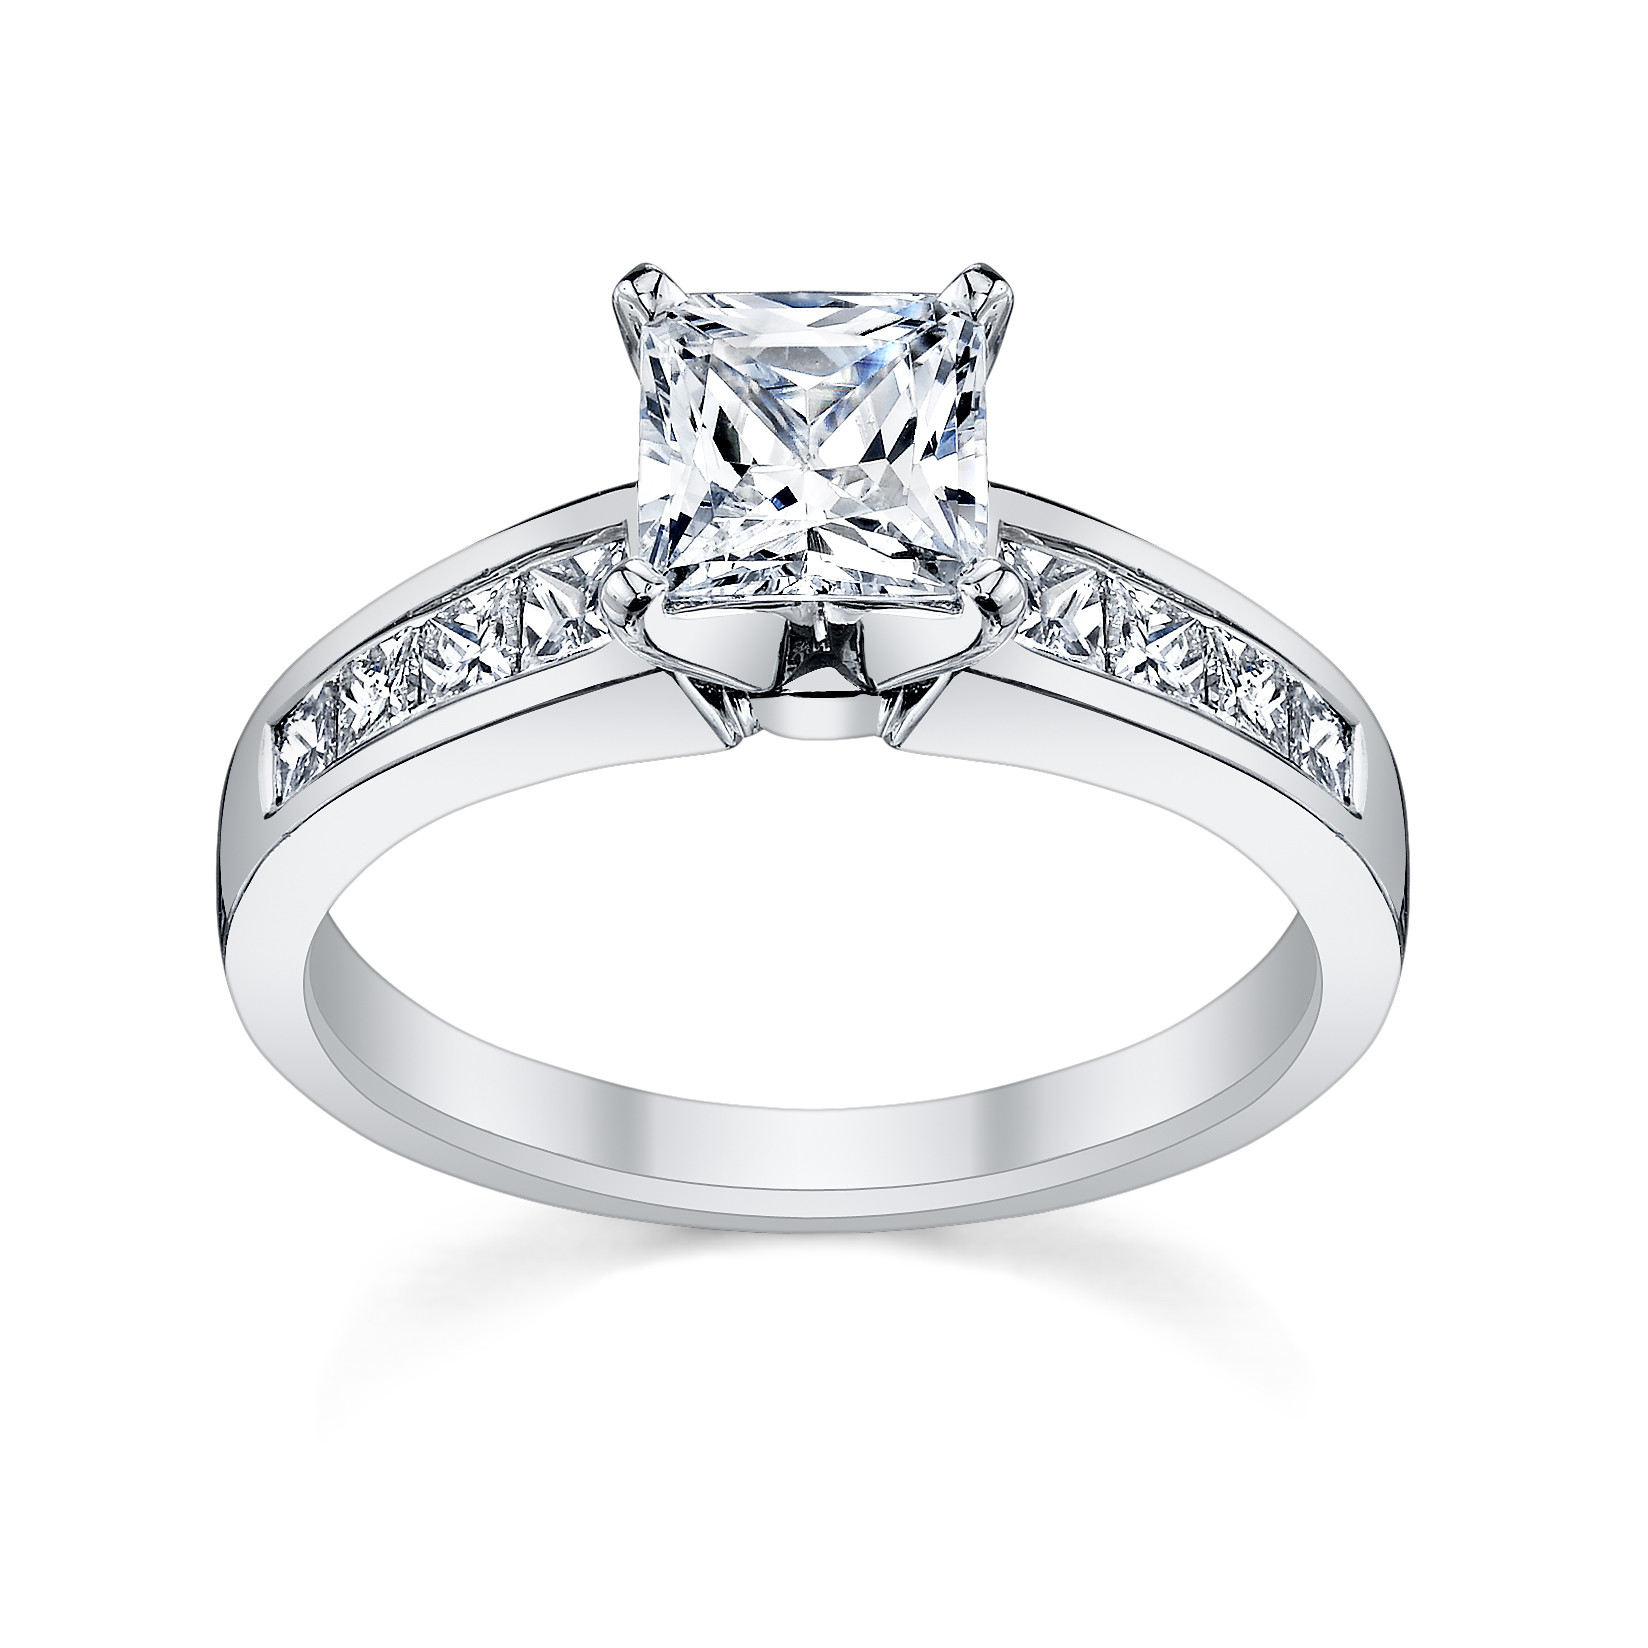 Diamond Engagement Rings Princess Cut
 6 Princess Cut Engagement Rings She ll Love Robbins